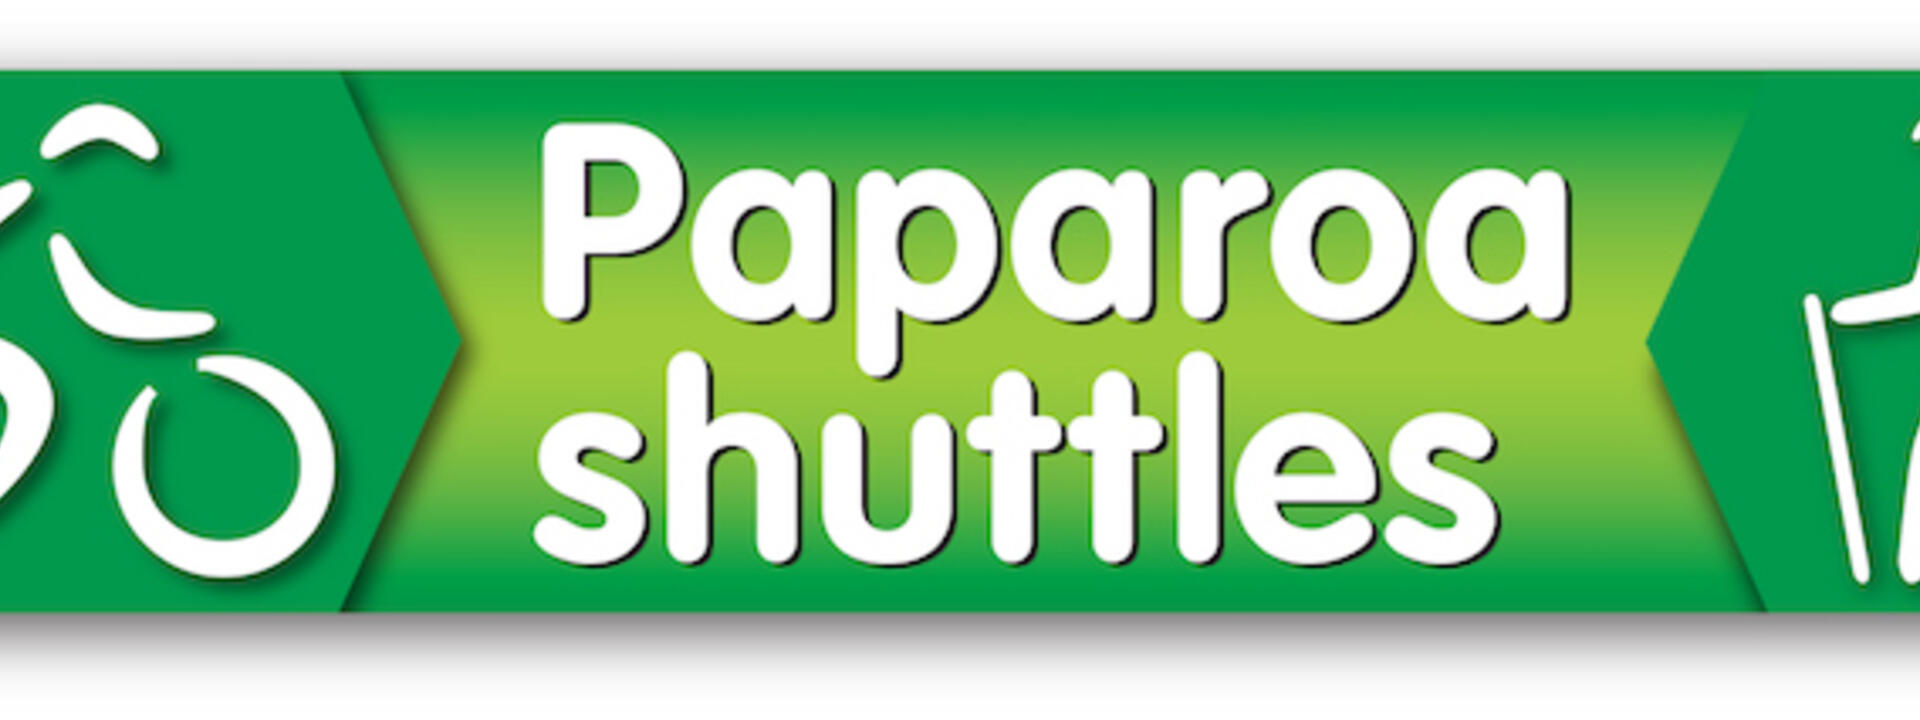 paparoa-shuttle-logo-copy.jpg